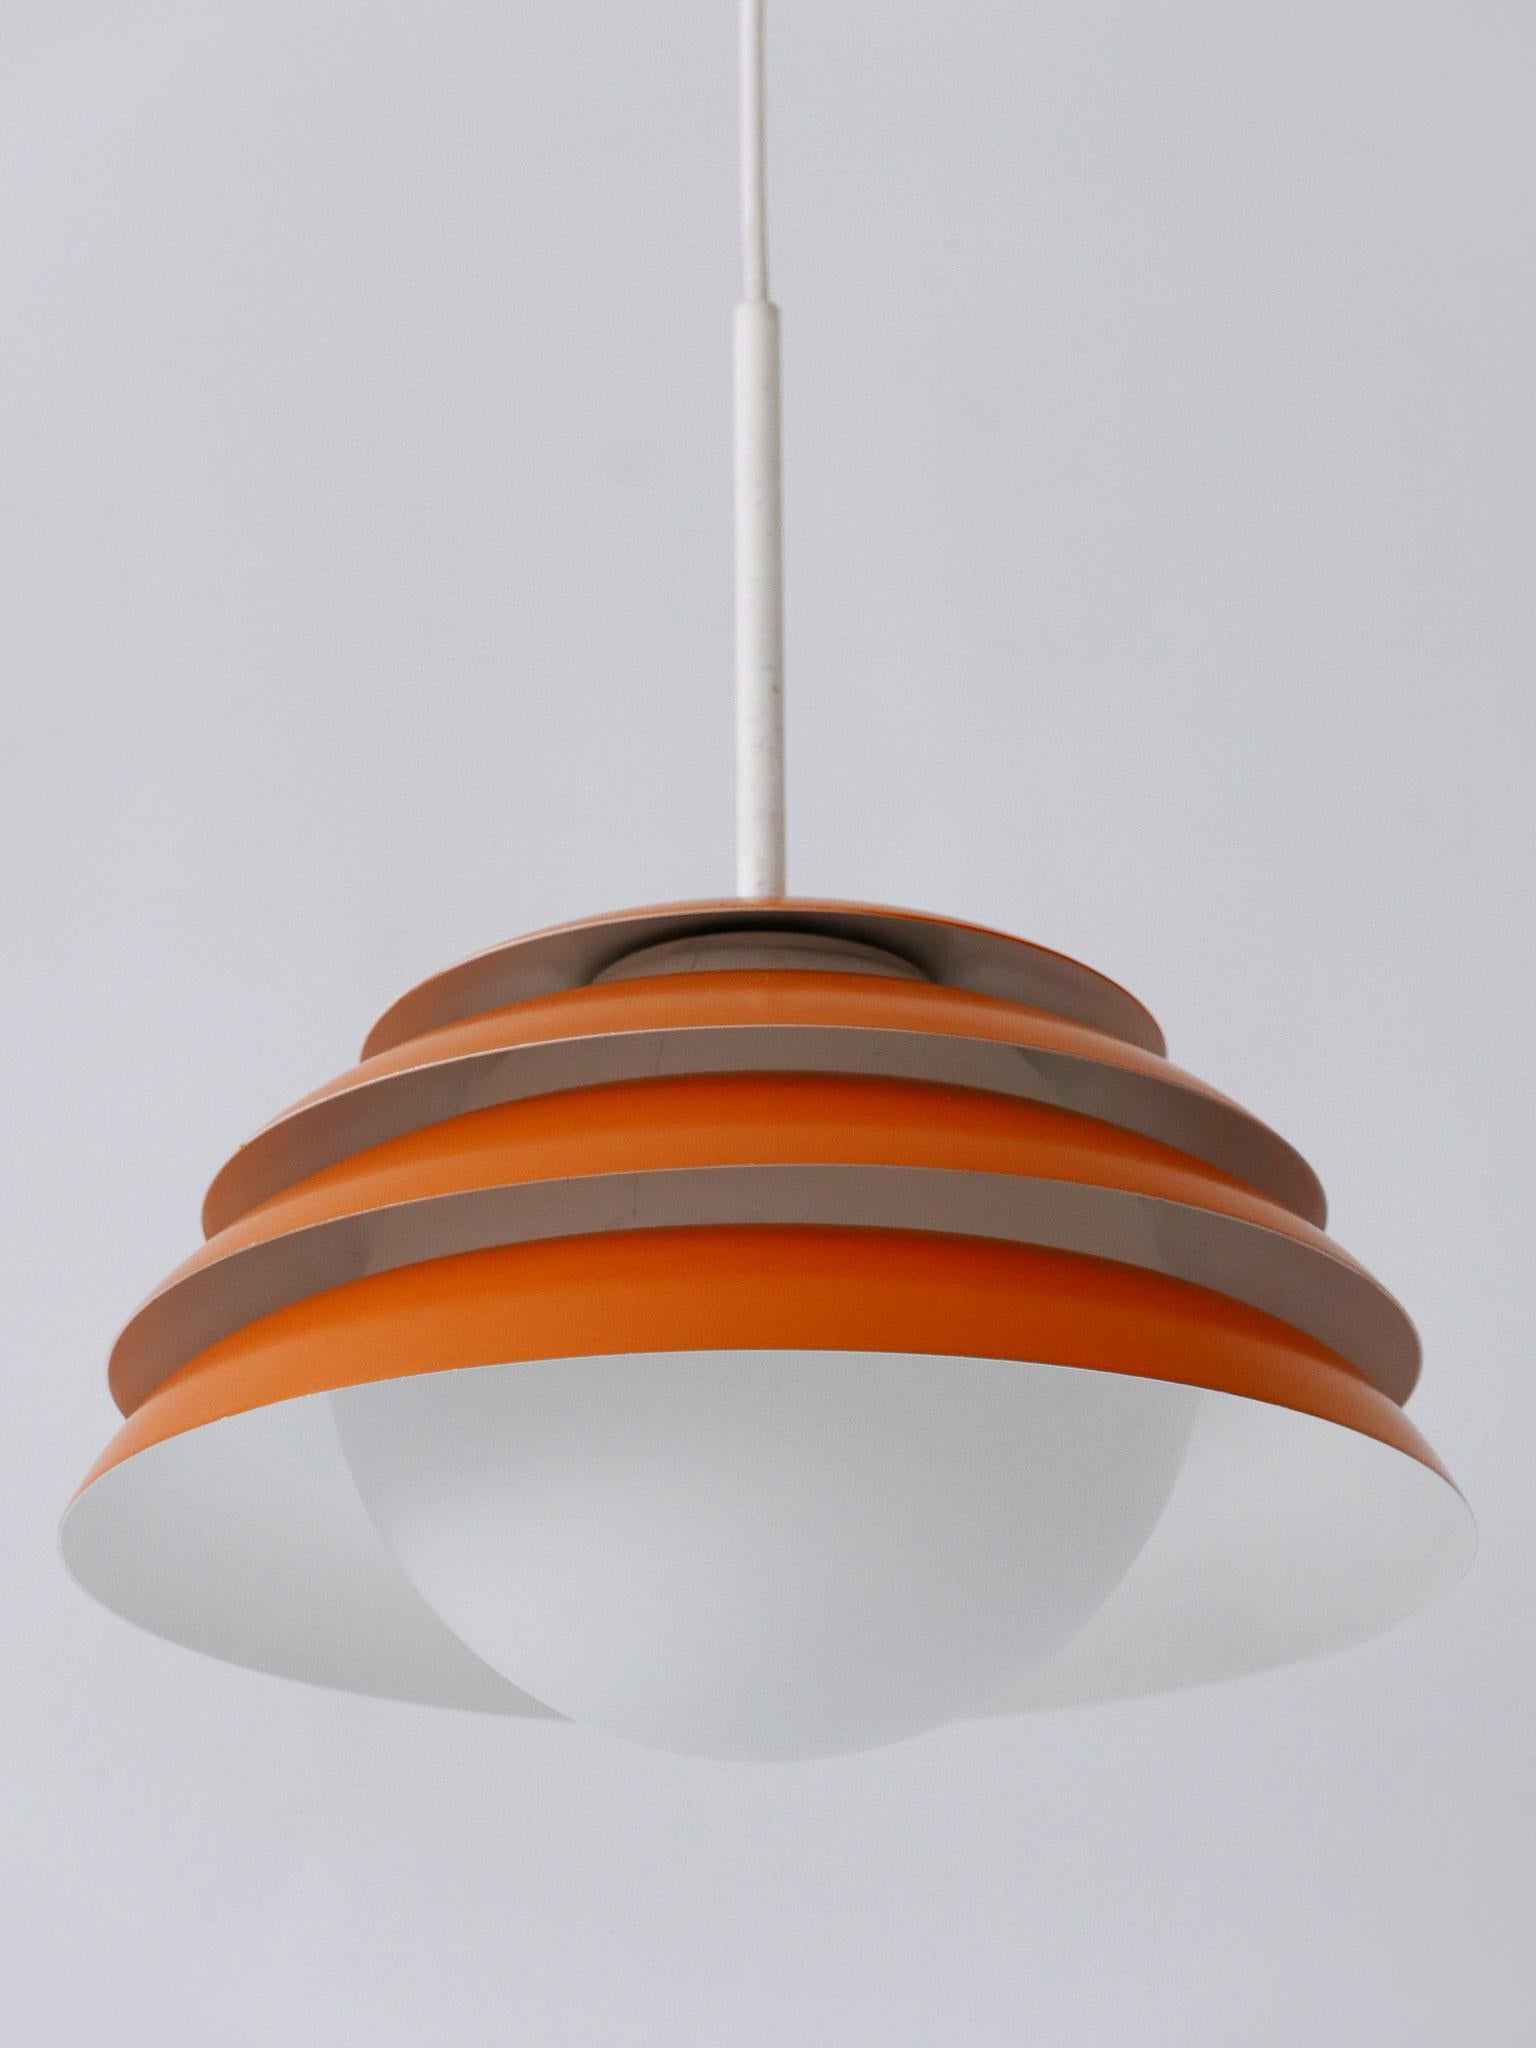 Aluminum Rare & Elegant Mid Century Modern Pendant Lamp or Hanging Light Germany 1960s For Sale